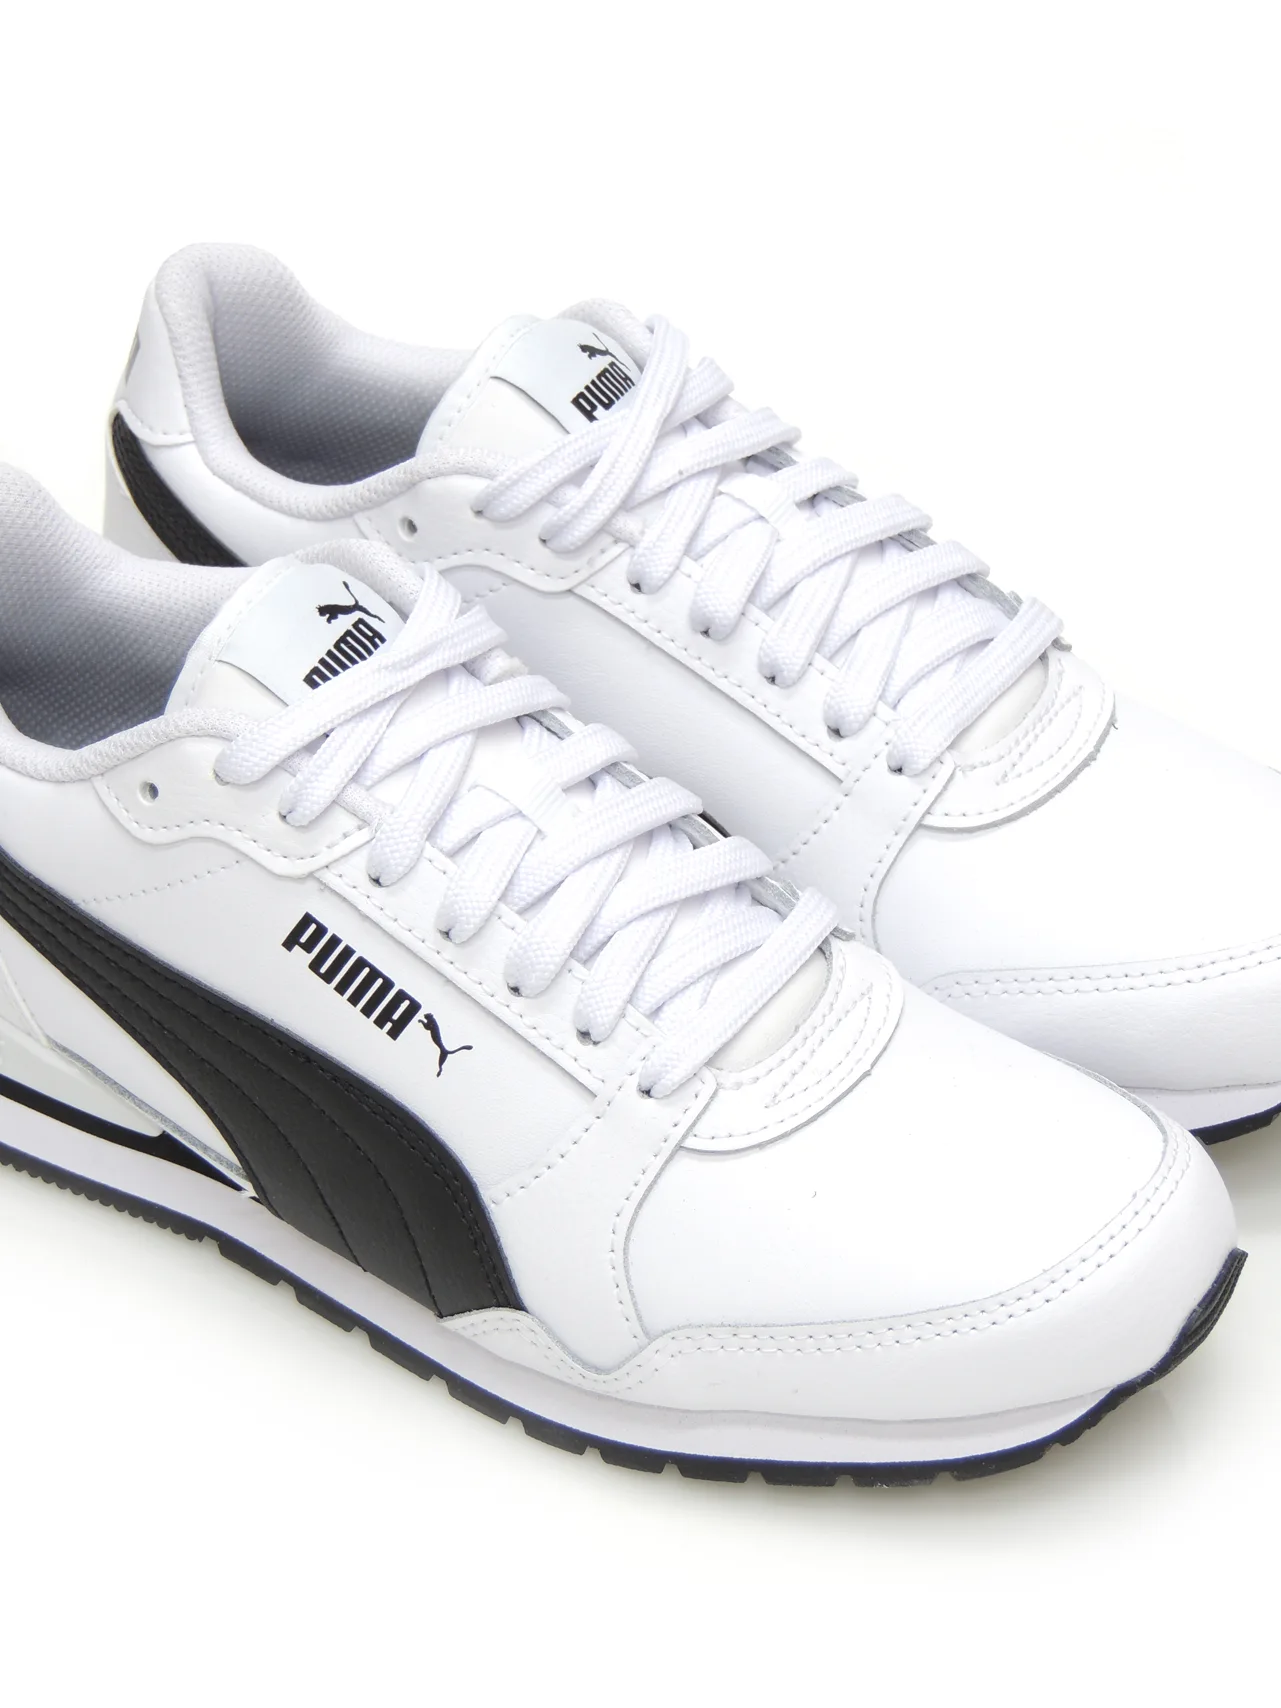 sneakers--puma-384855-polipiel-blanco